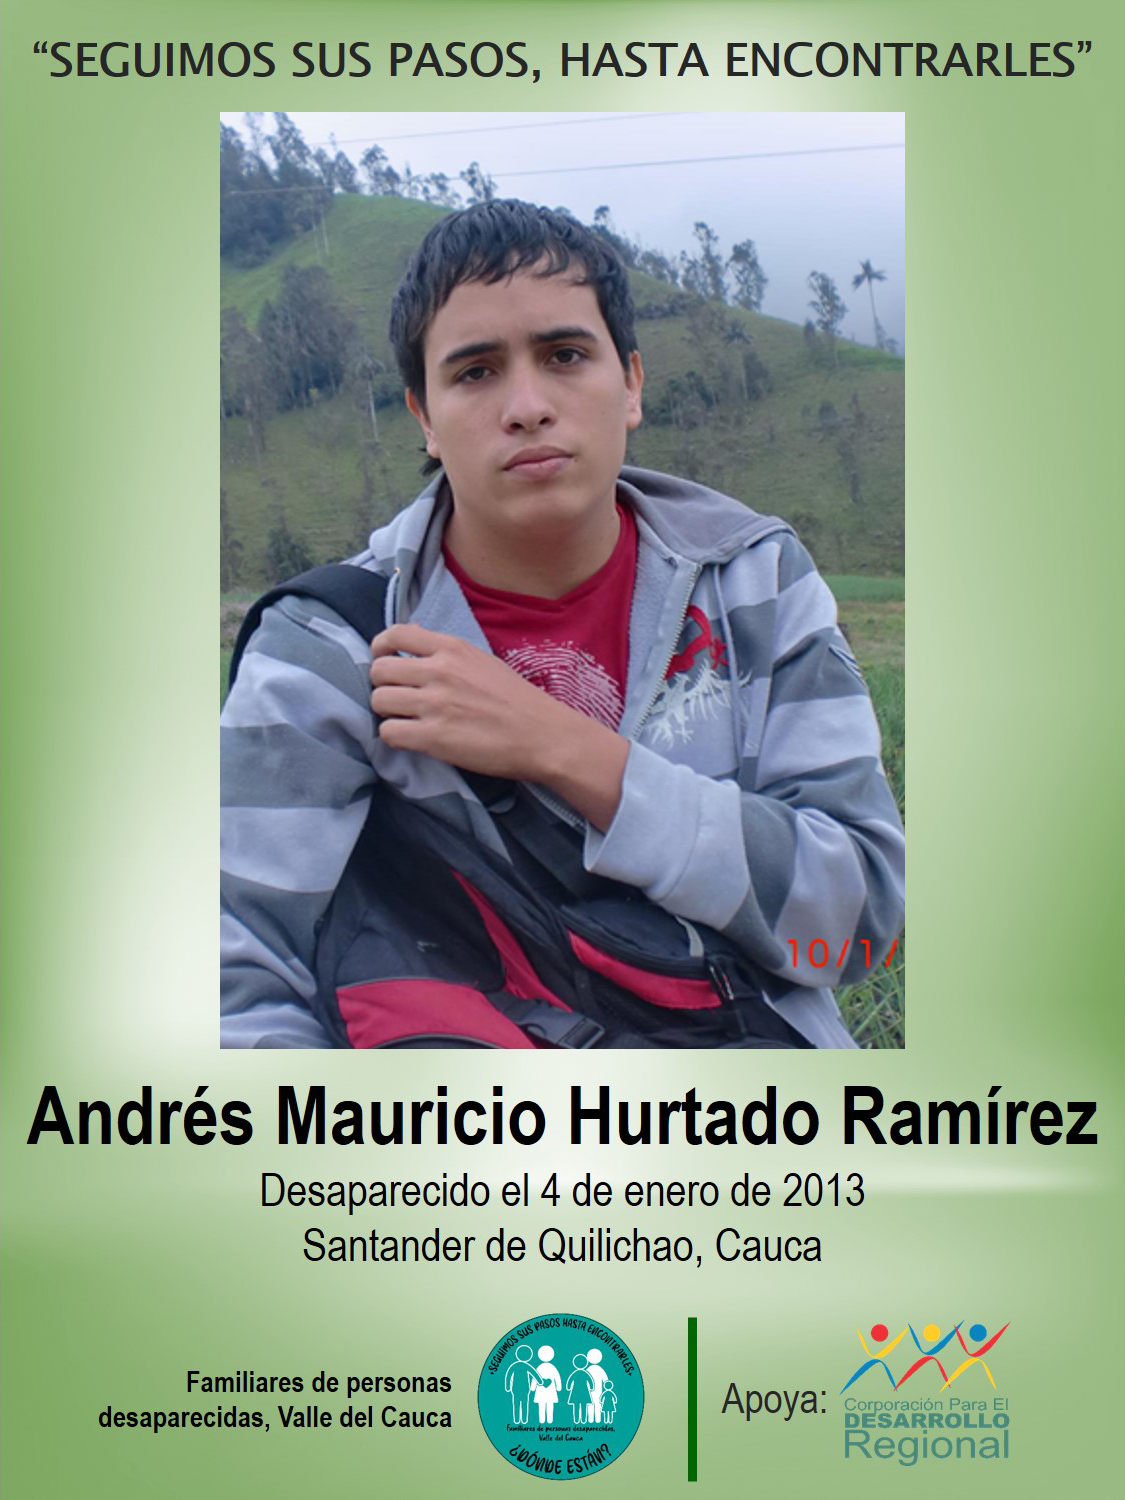 Andrés Mauricio Hurtado Ramírez